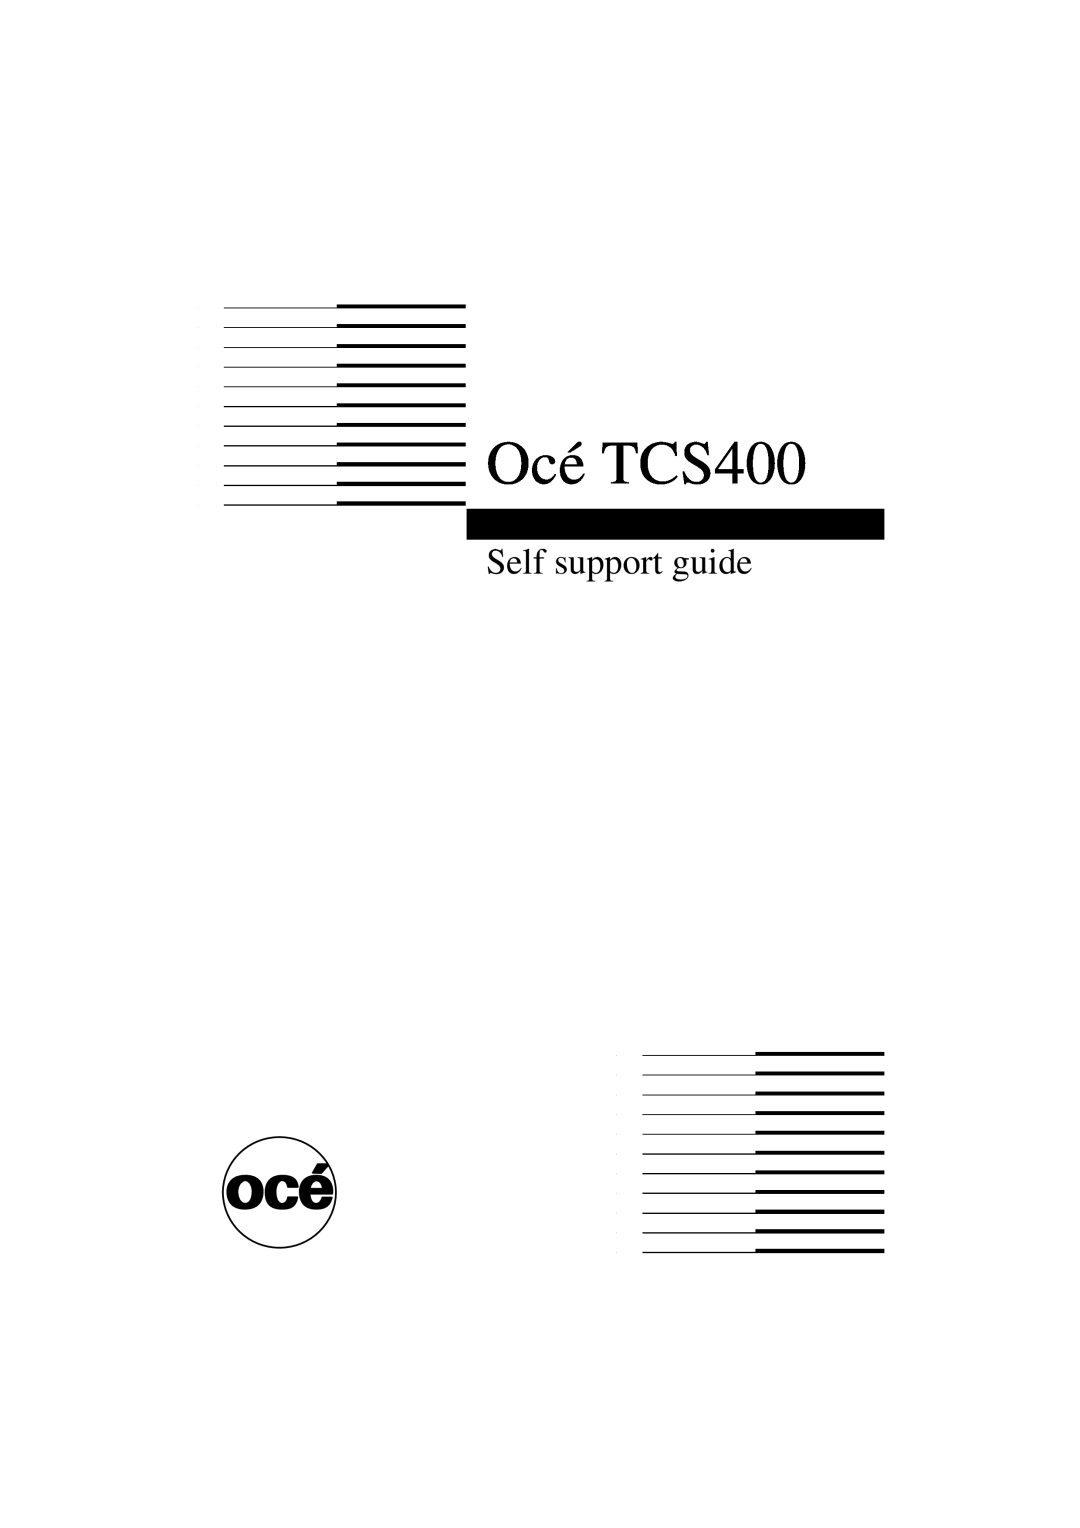 Oce North America manual Self support guide, Océ TCS400 